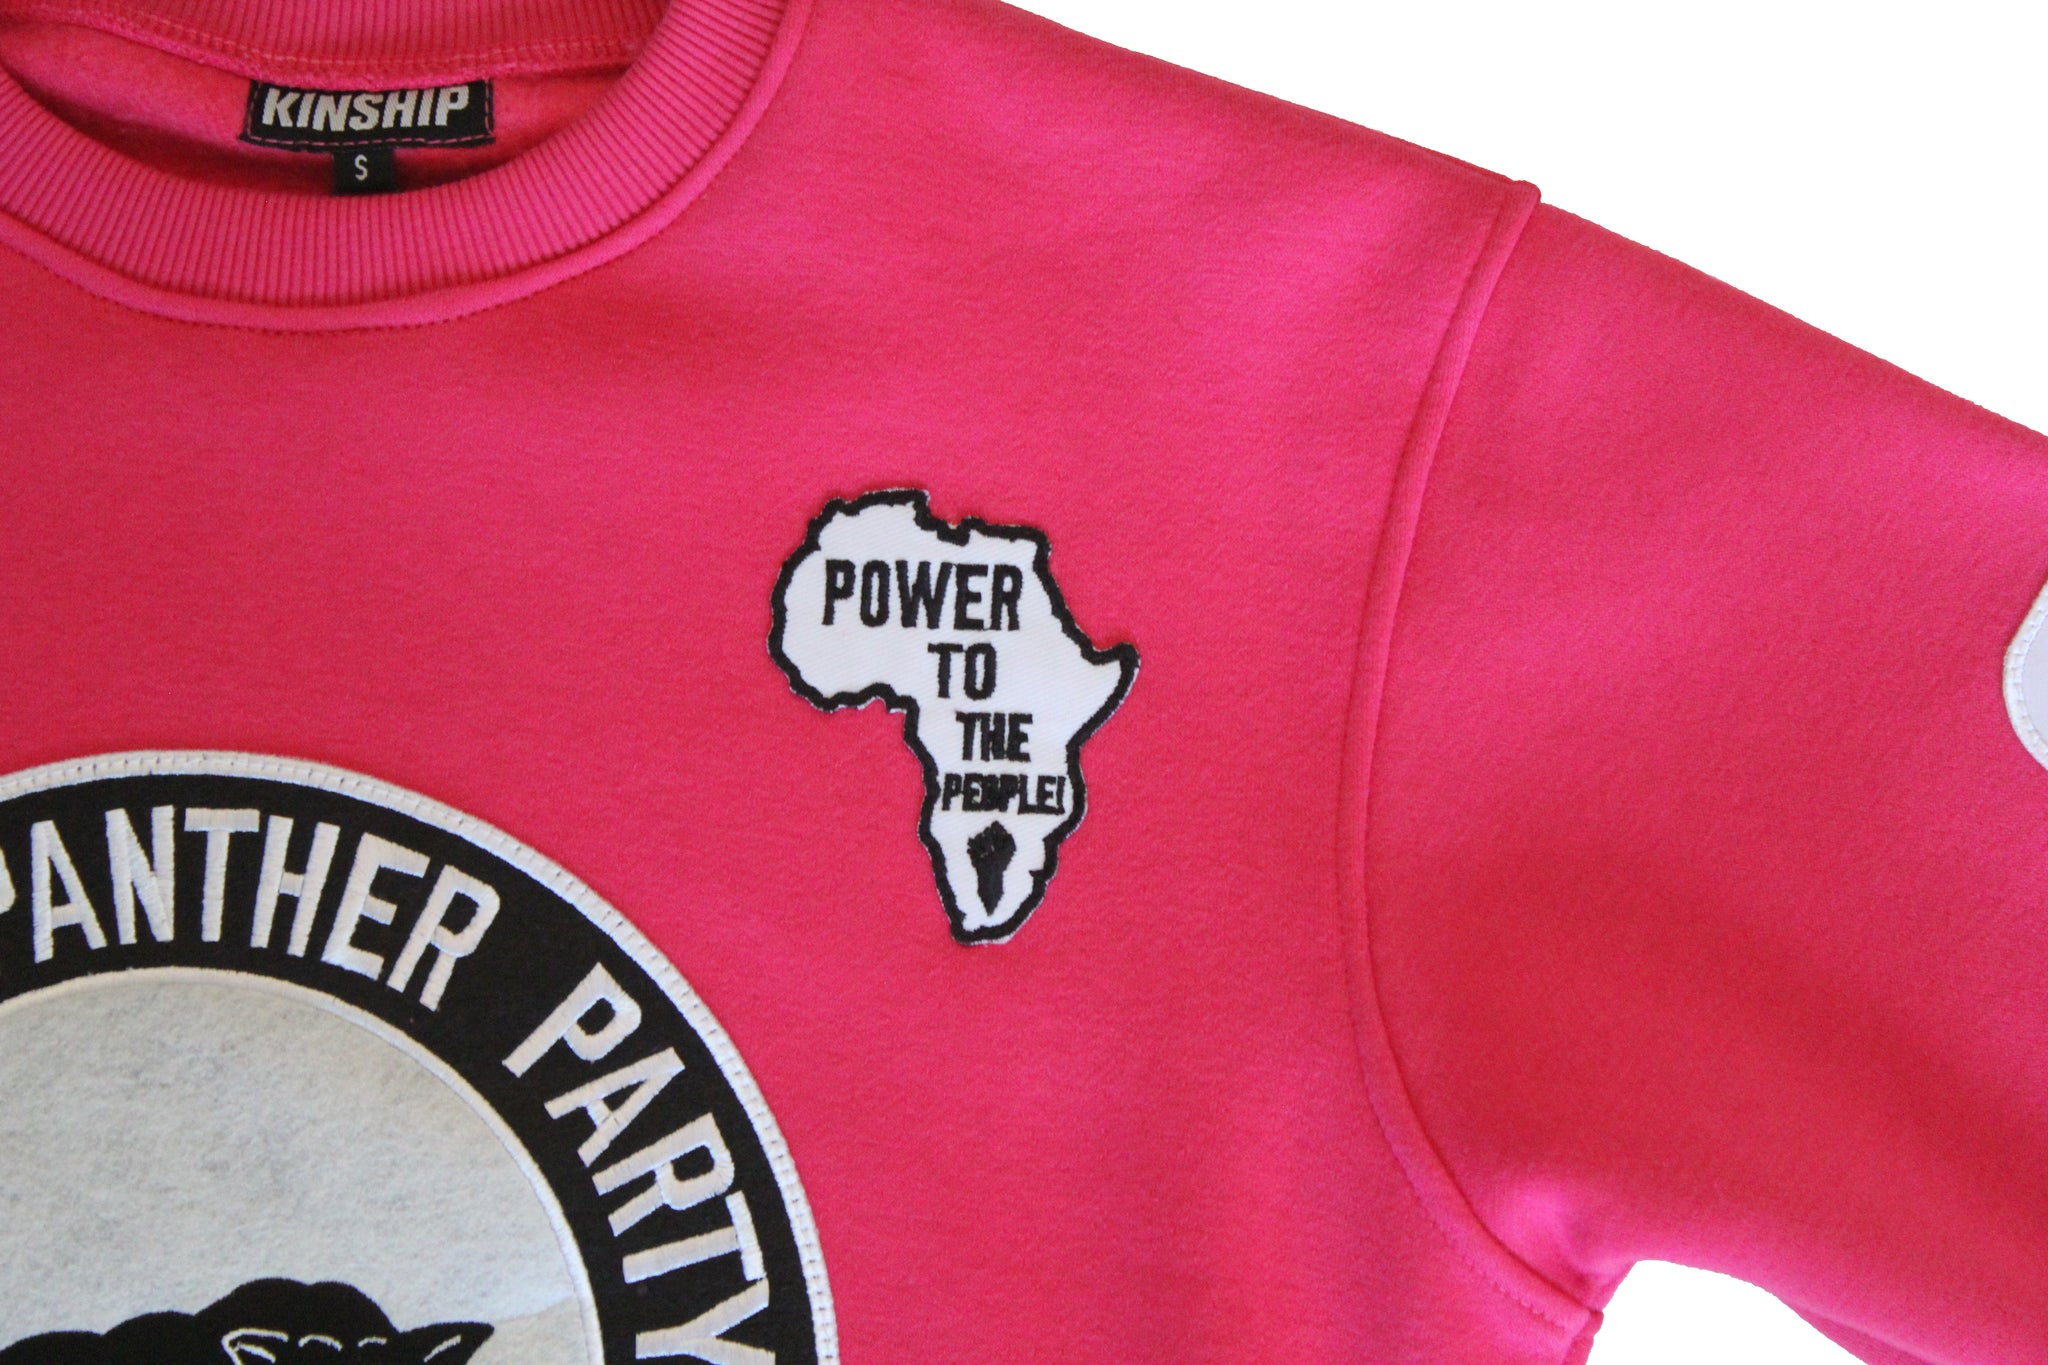 Black Panther Hockey Sweatshirt in Pink Contrast (Men's Sizing)